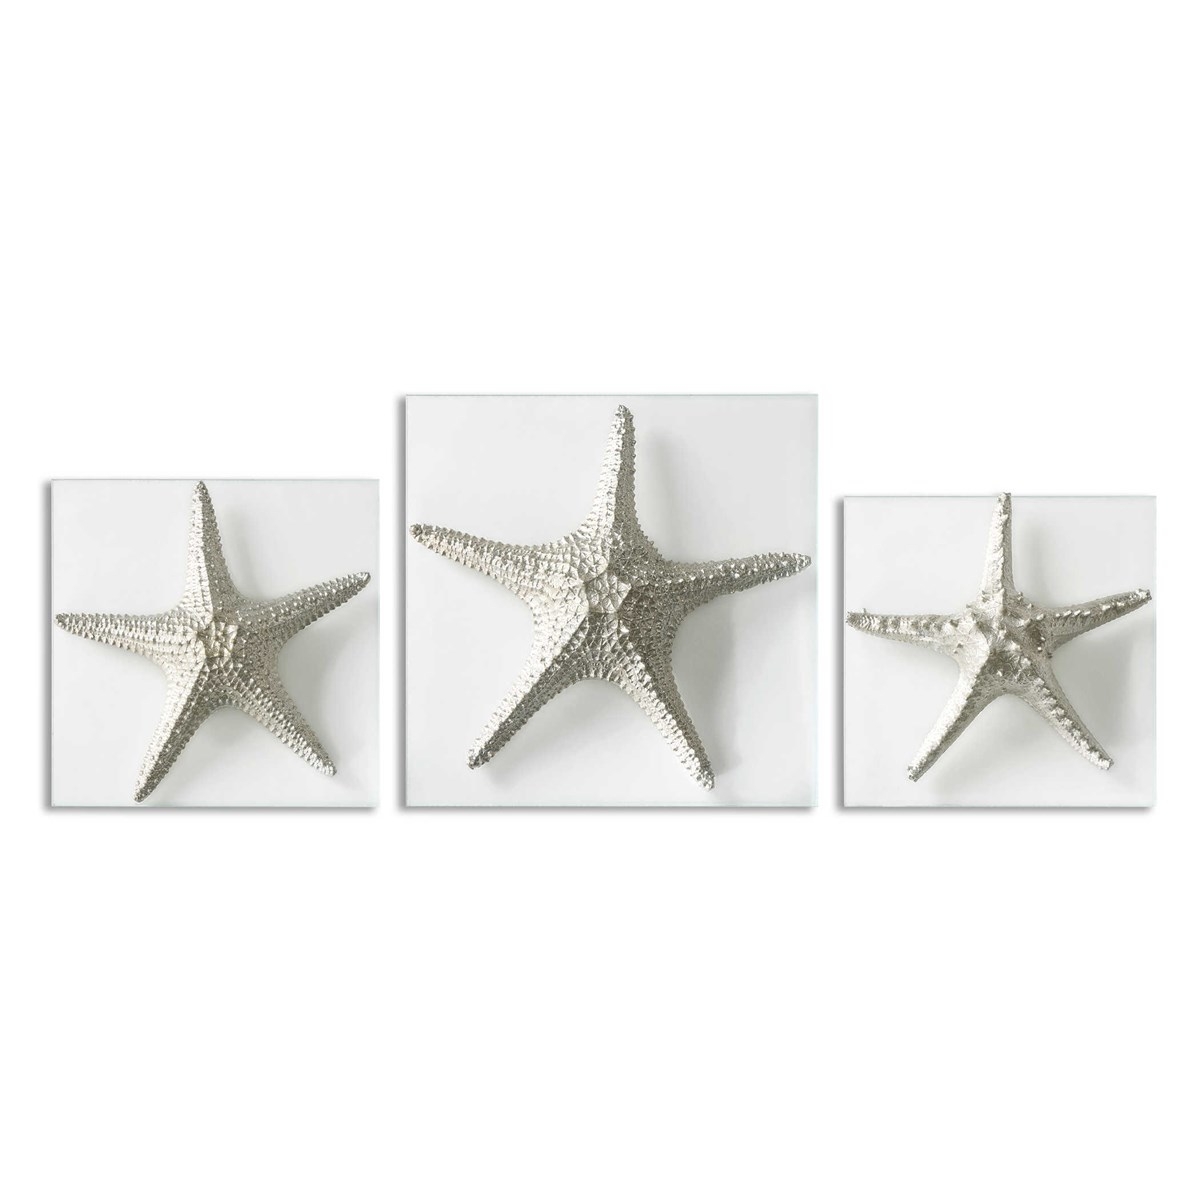 NEXT » Silver Starfish, S/3 - Image 0